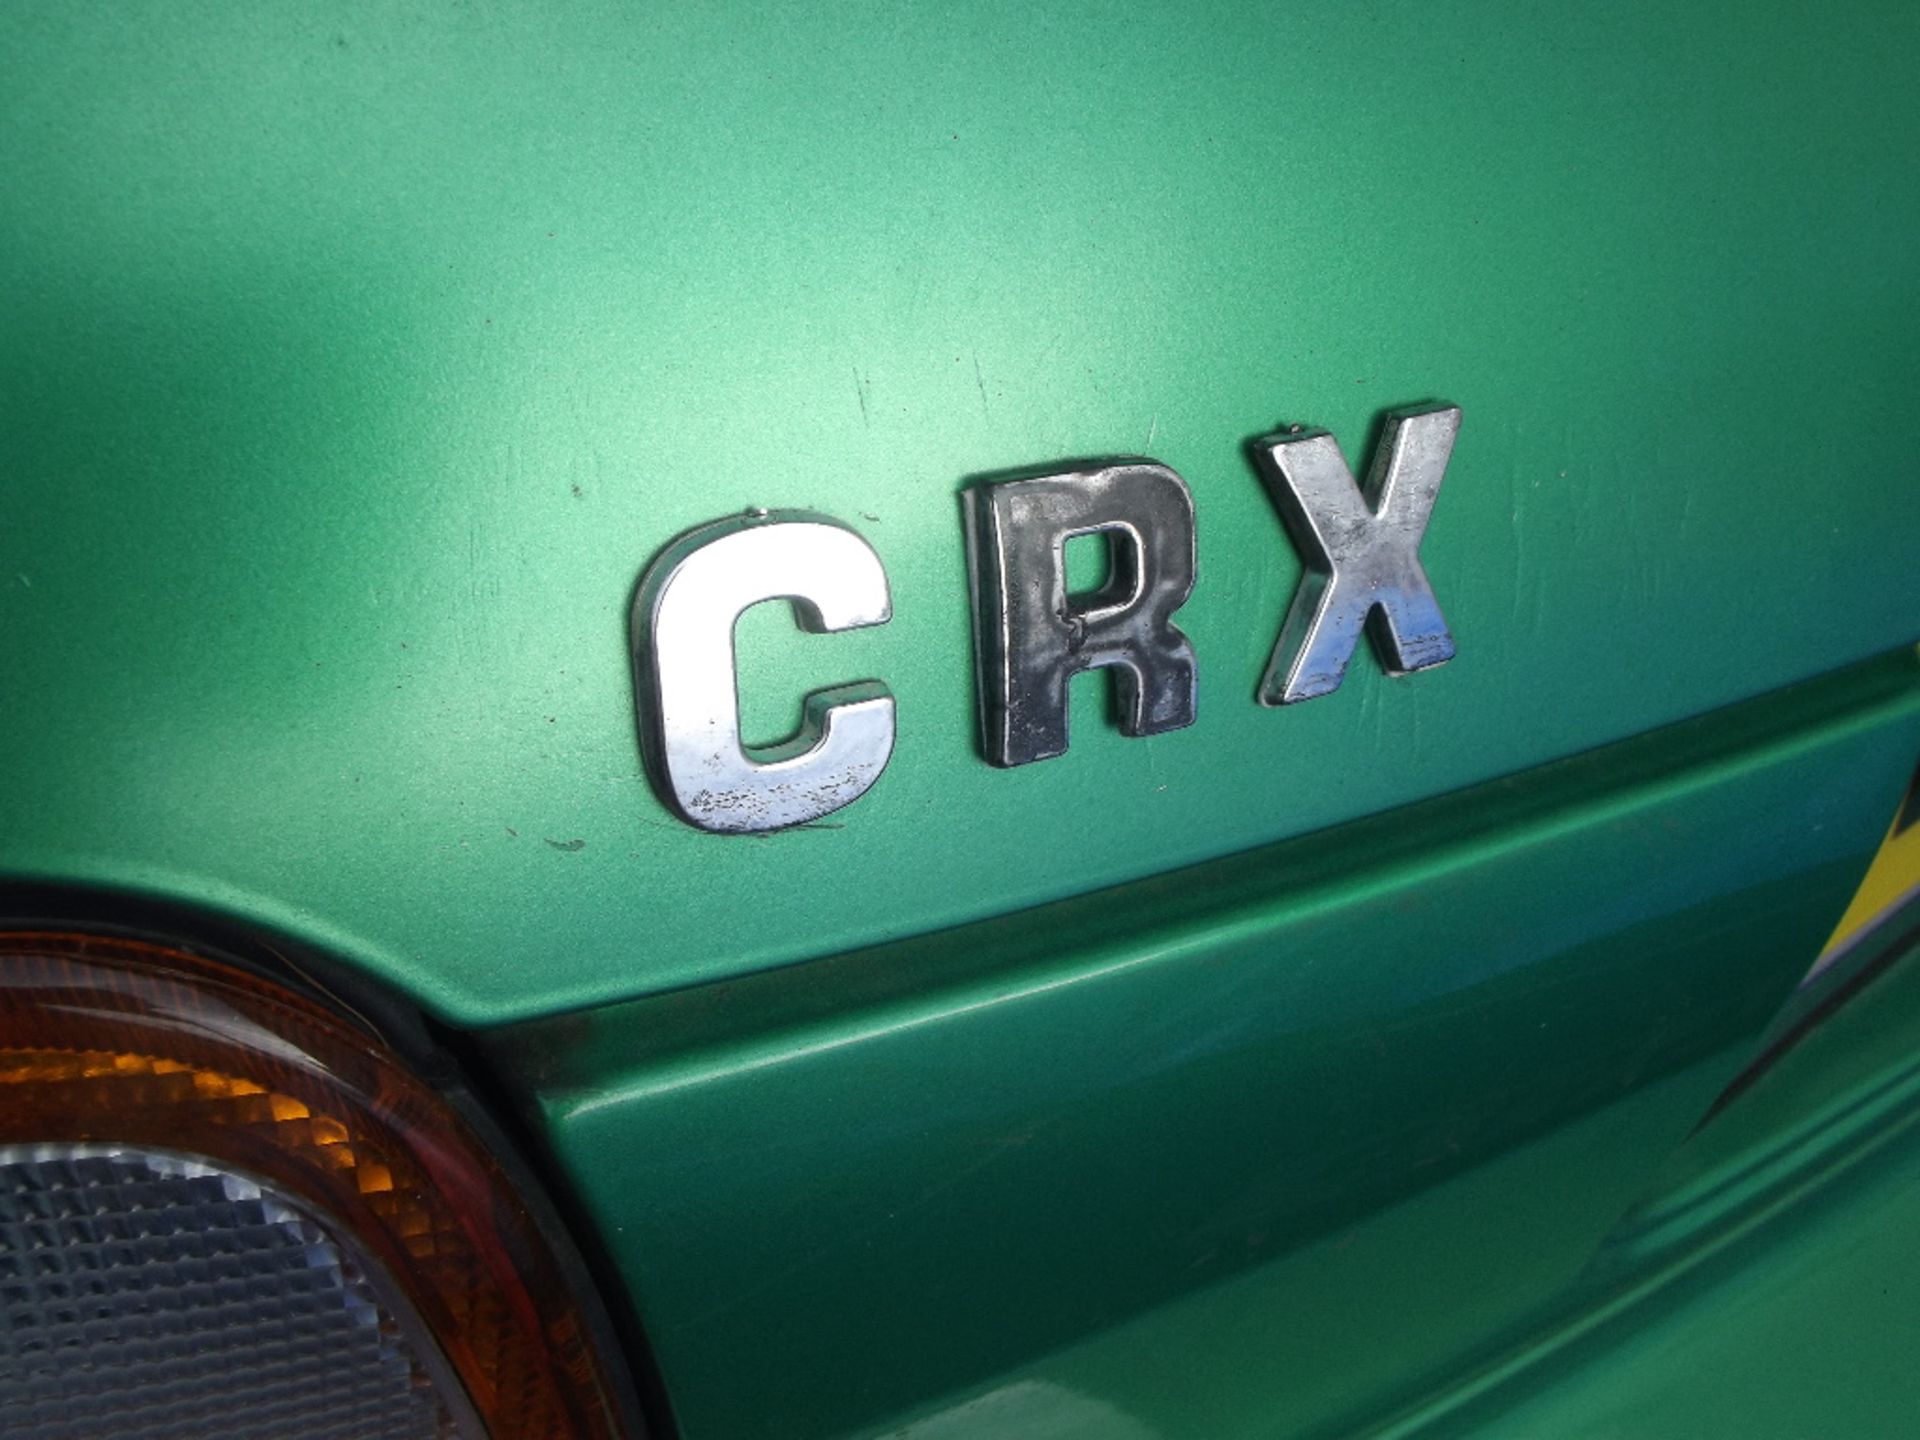 A 1993 Honda CRX, registration number L342 BPK, green. - Image 5 of 5